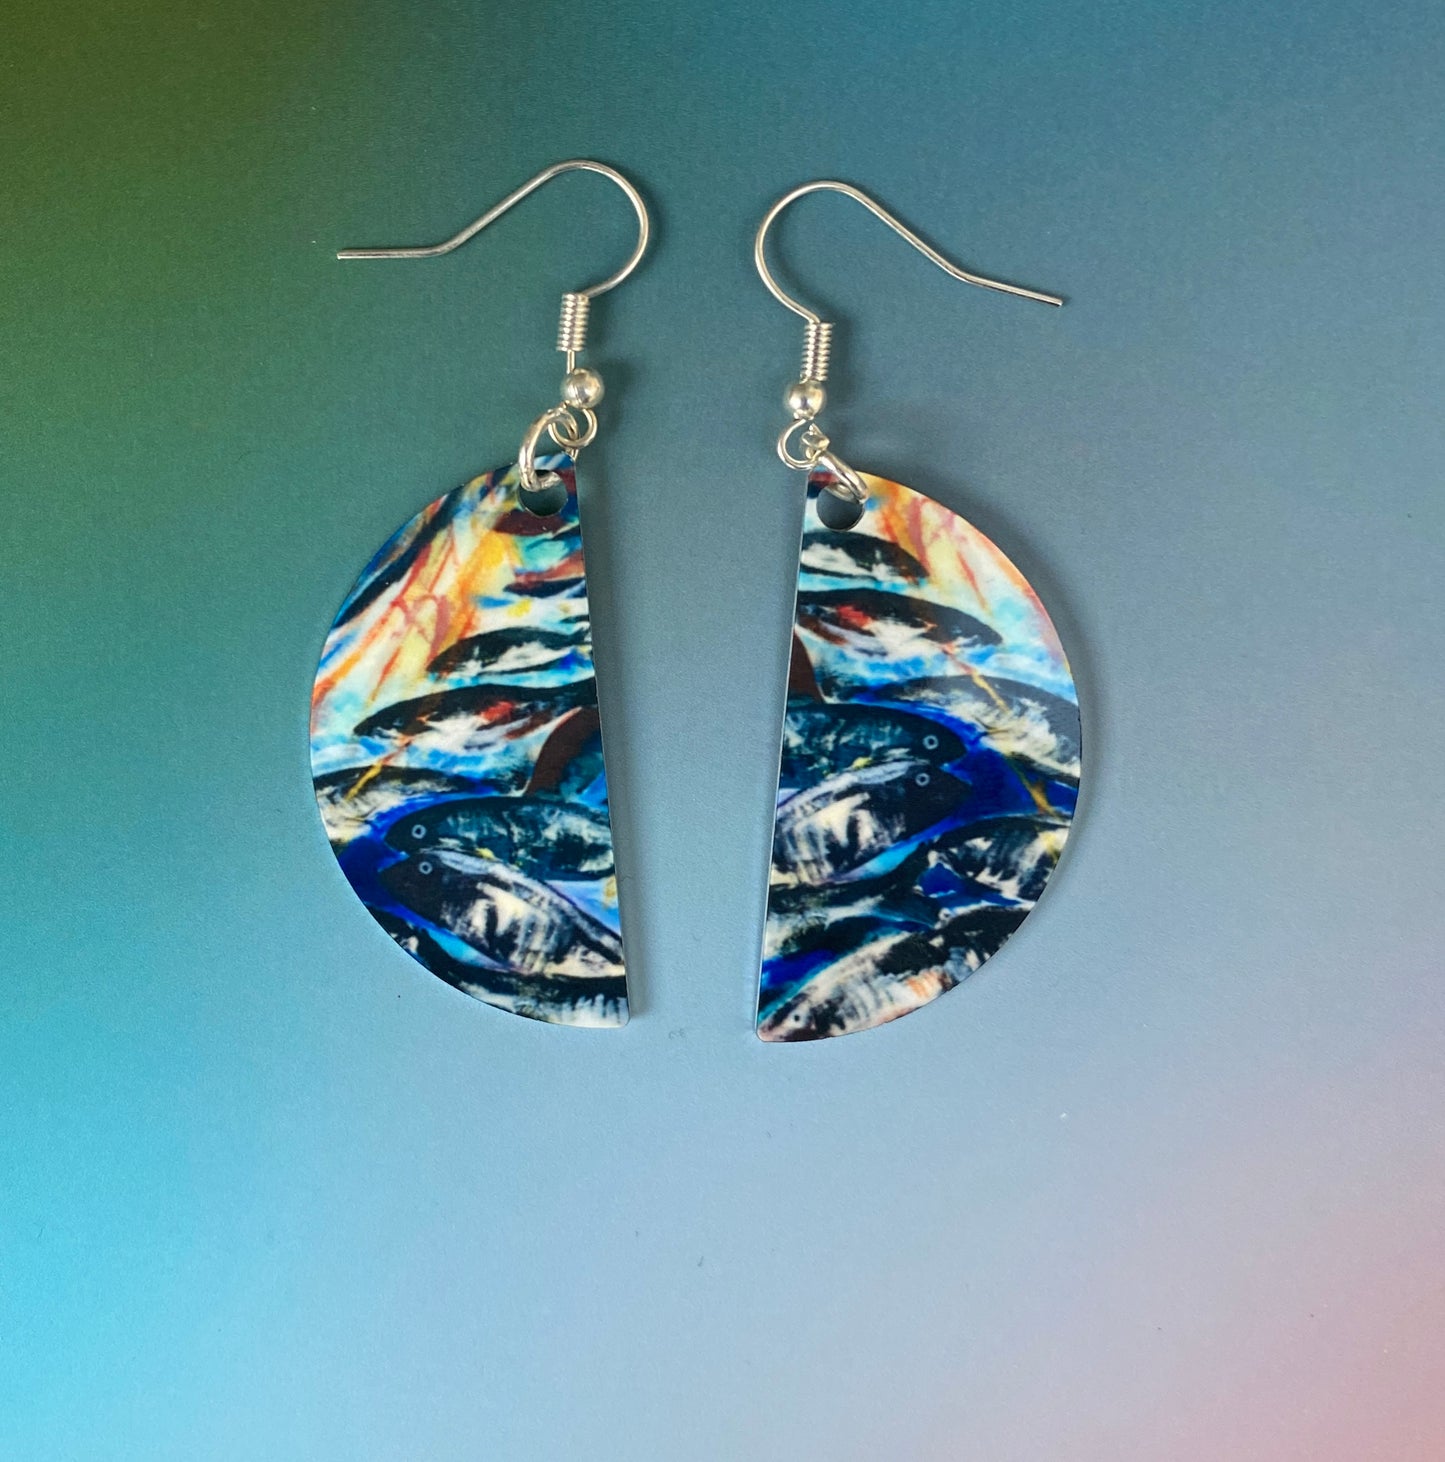 A pair of earrings design Silver darlings by Orkney artist Jane Glue, Scotland